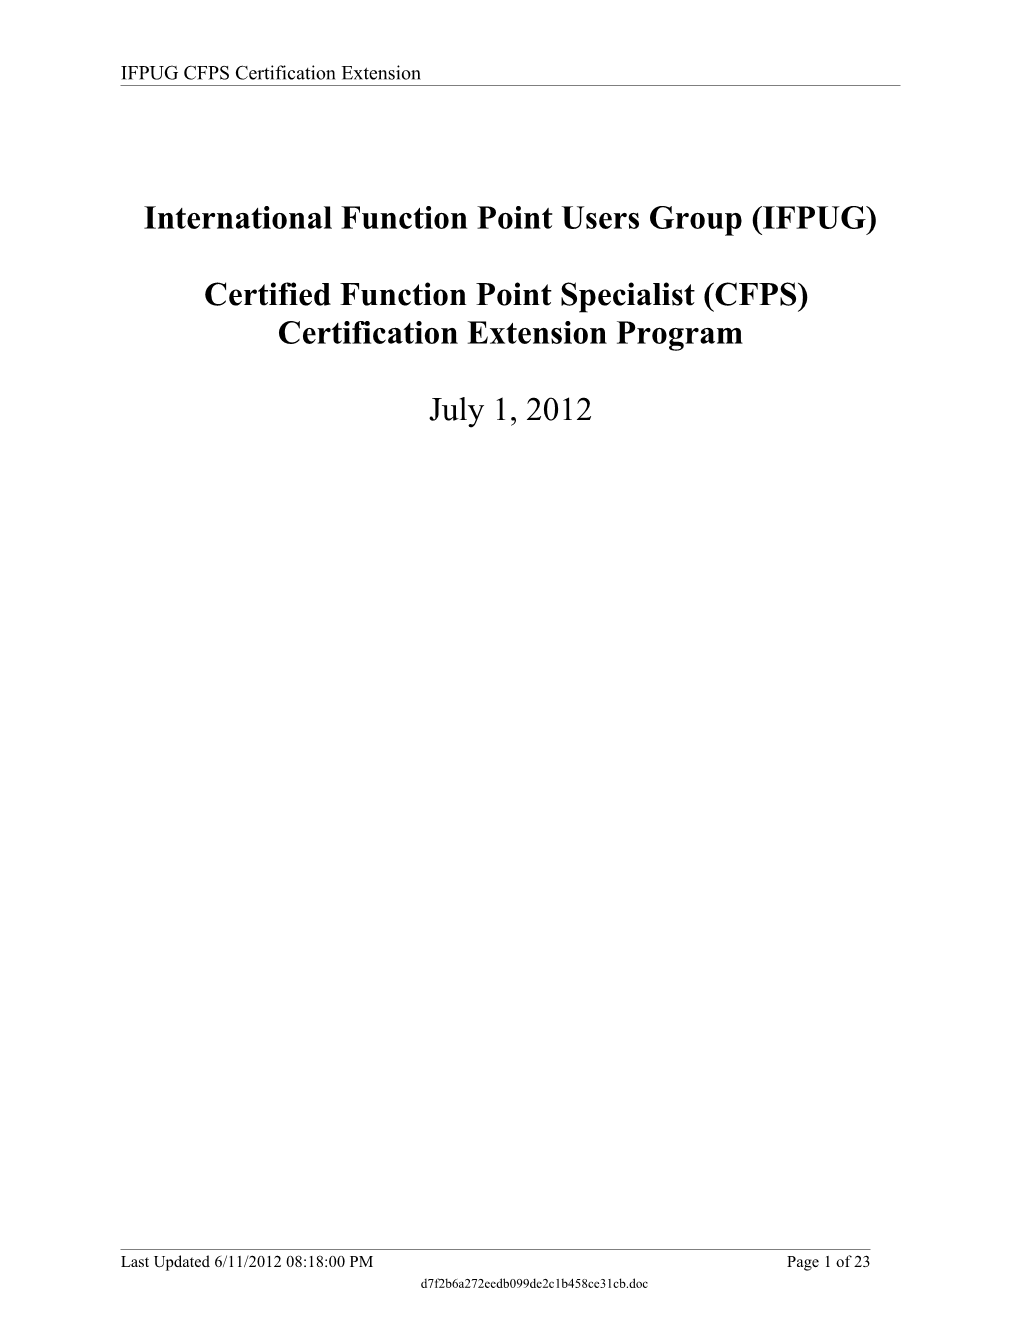 CFPS Activity-Credit Document